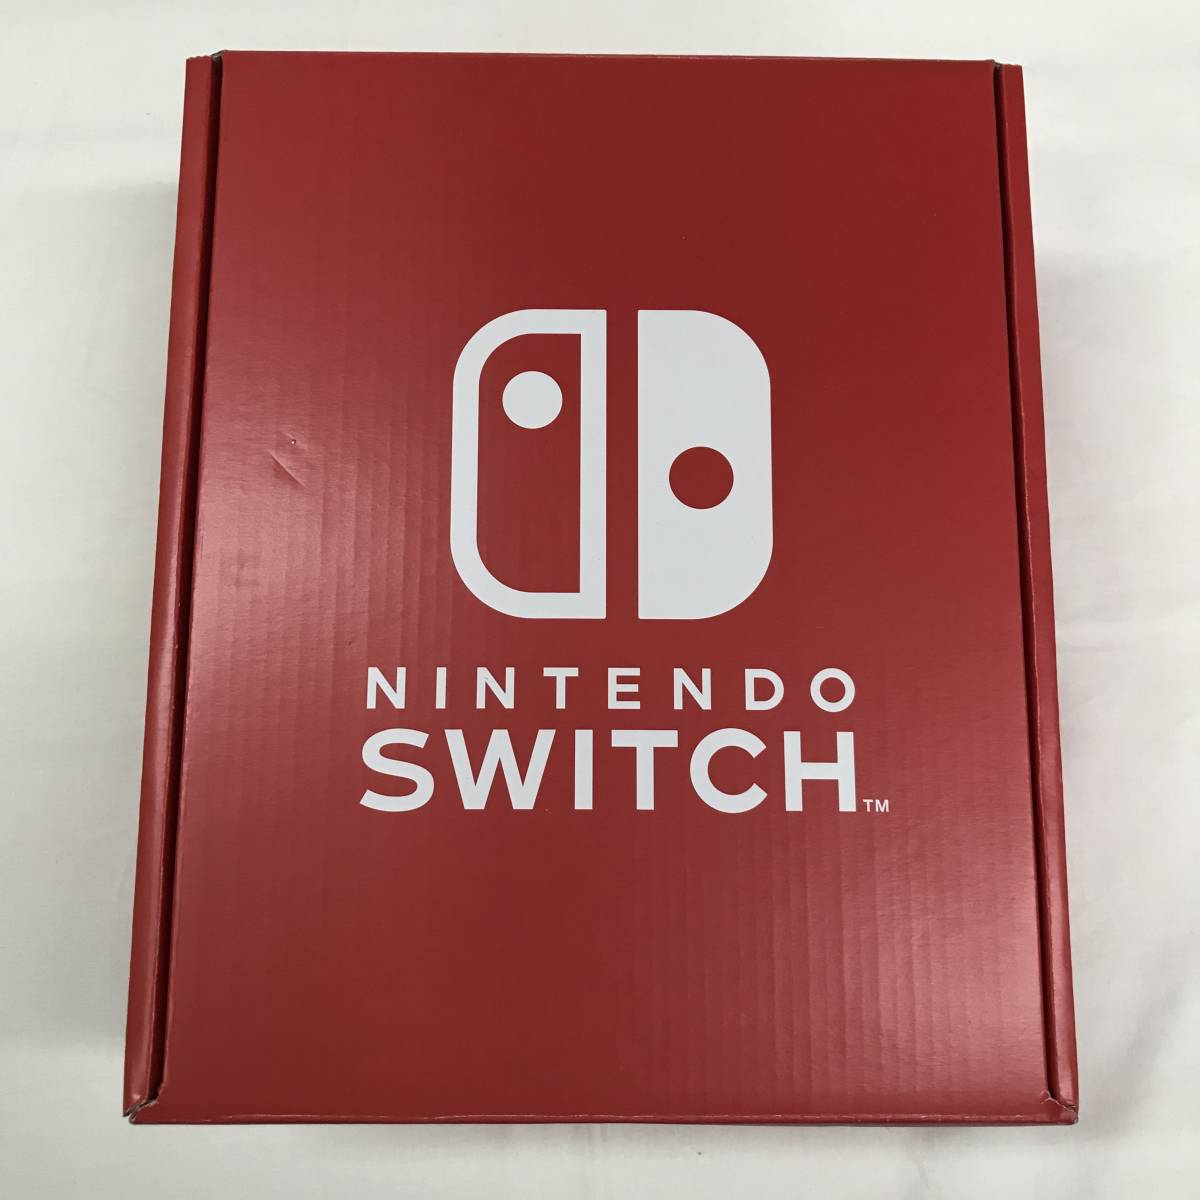 gb3121 ニンテンドースイッチ 本体 ストア版 Nintendo Switch Joy-Con 